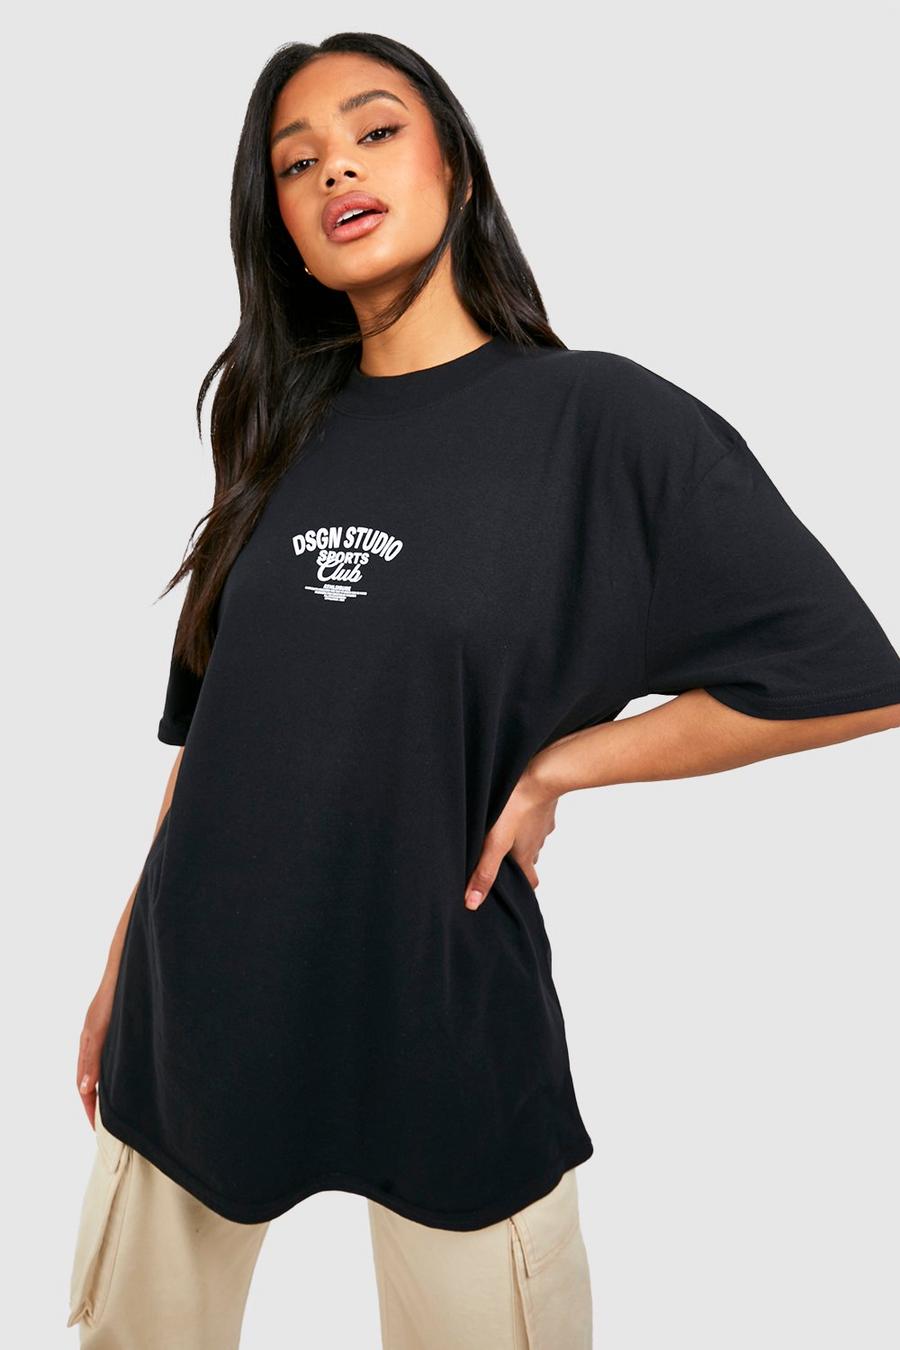 Black Dsgn Studio Sports Club Slogan Oversized T-shirt 